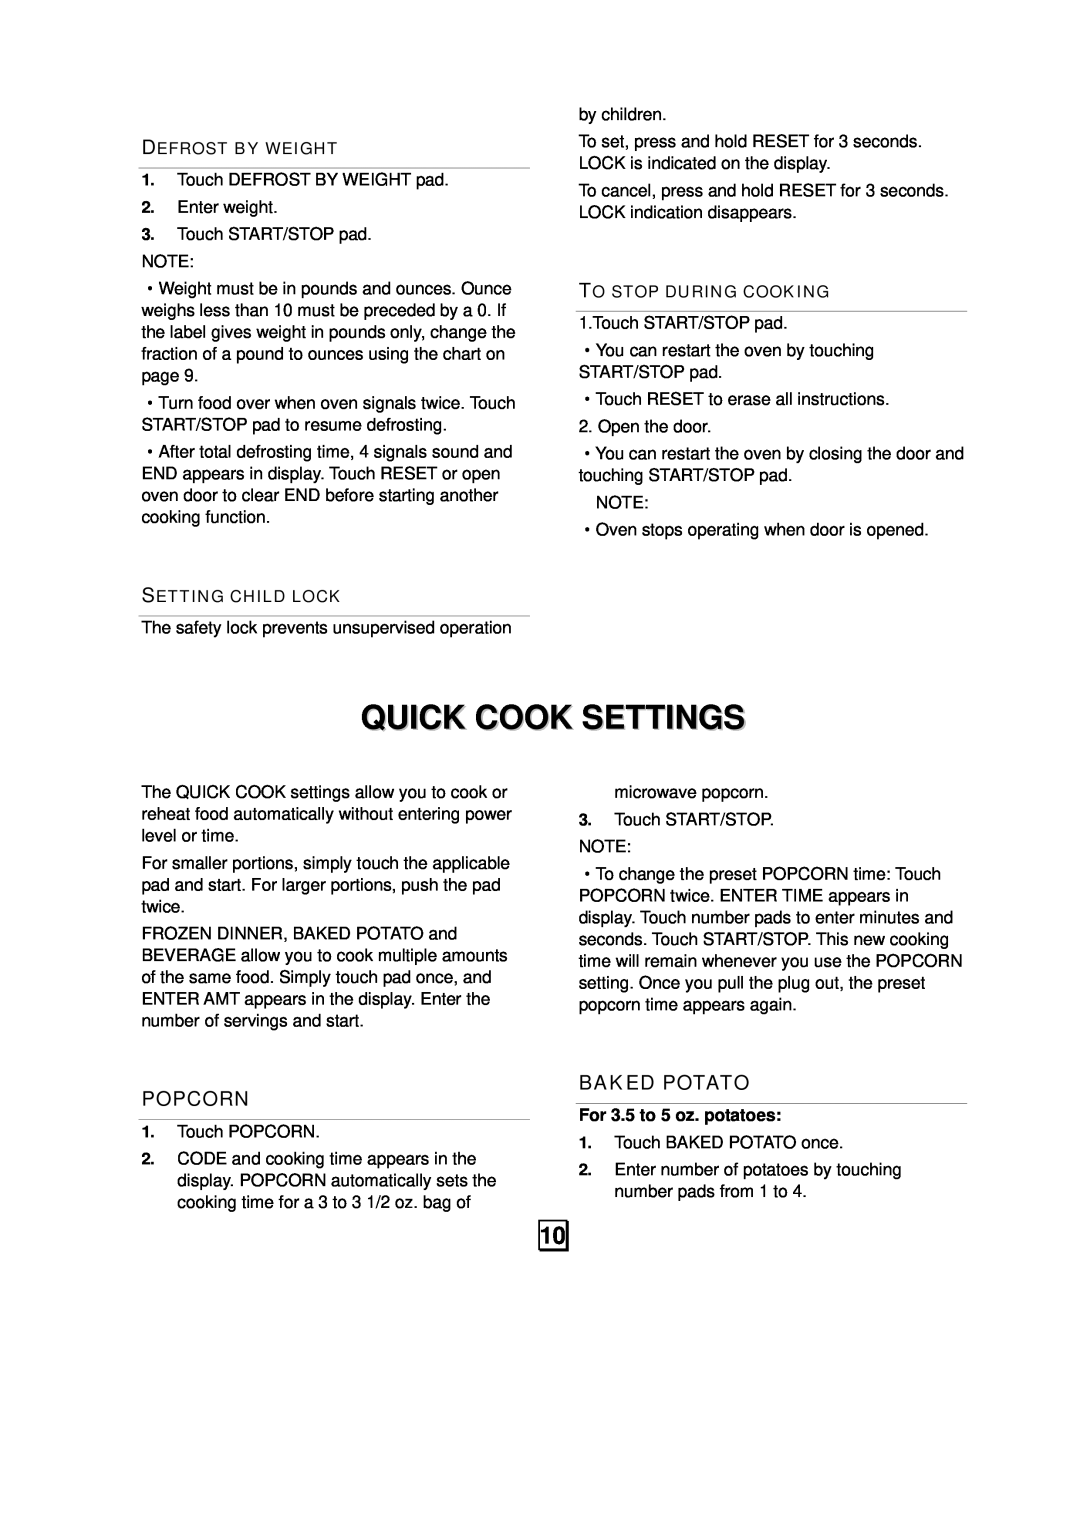 Sanyo EM-S7595S instruction manual Quick Cook Settings, Popcorn, Baked Potato 